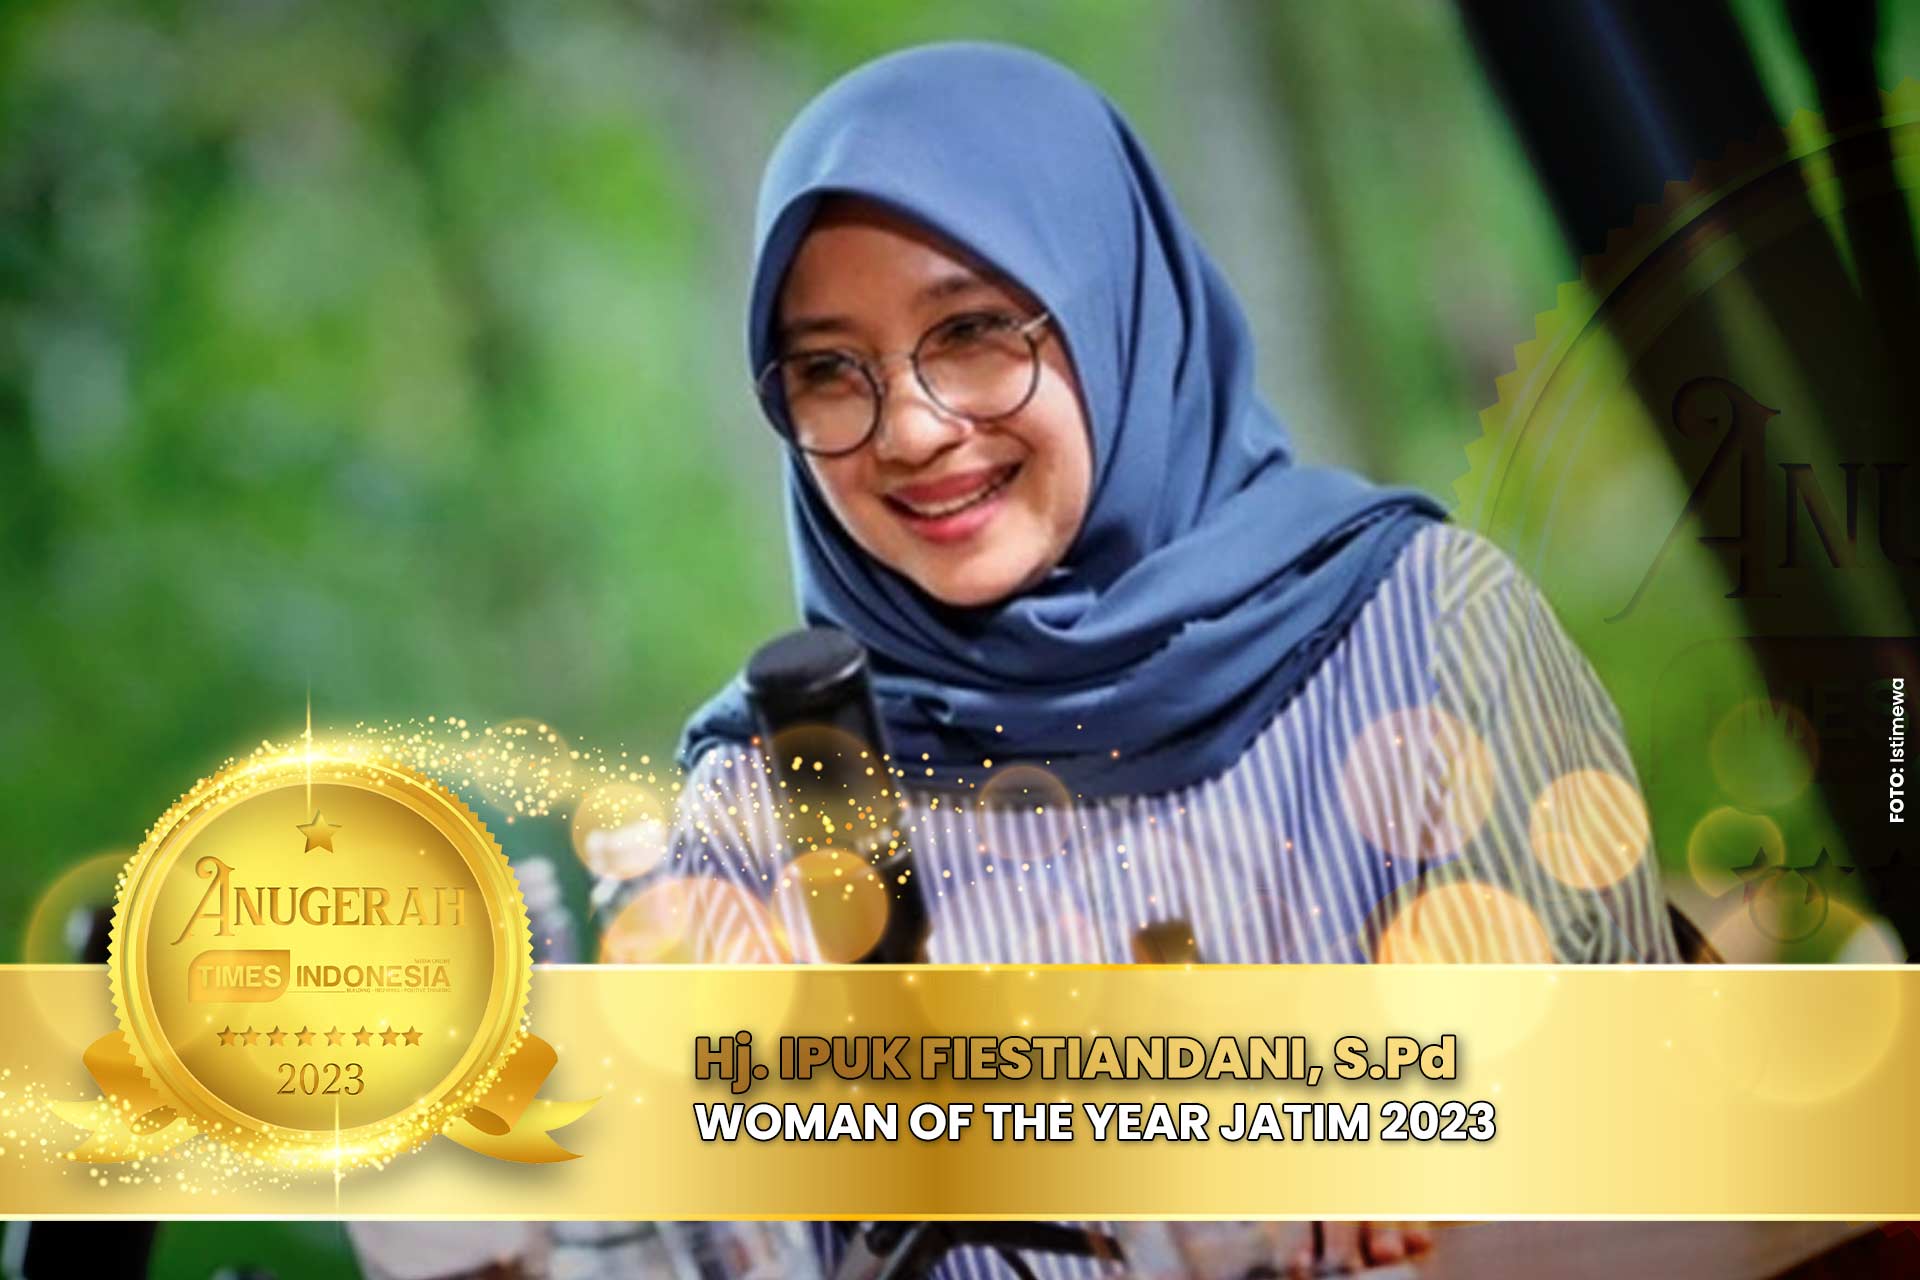 Woman of The Year Jatim 2023, Ipuk Fiestiandani.